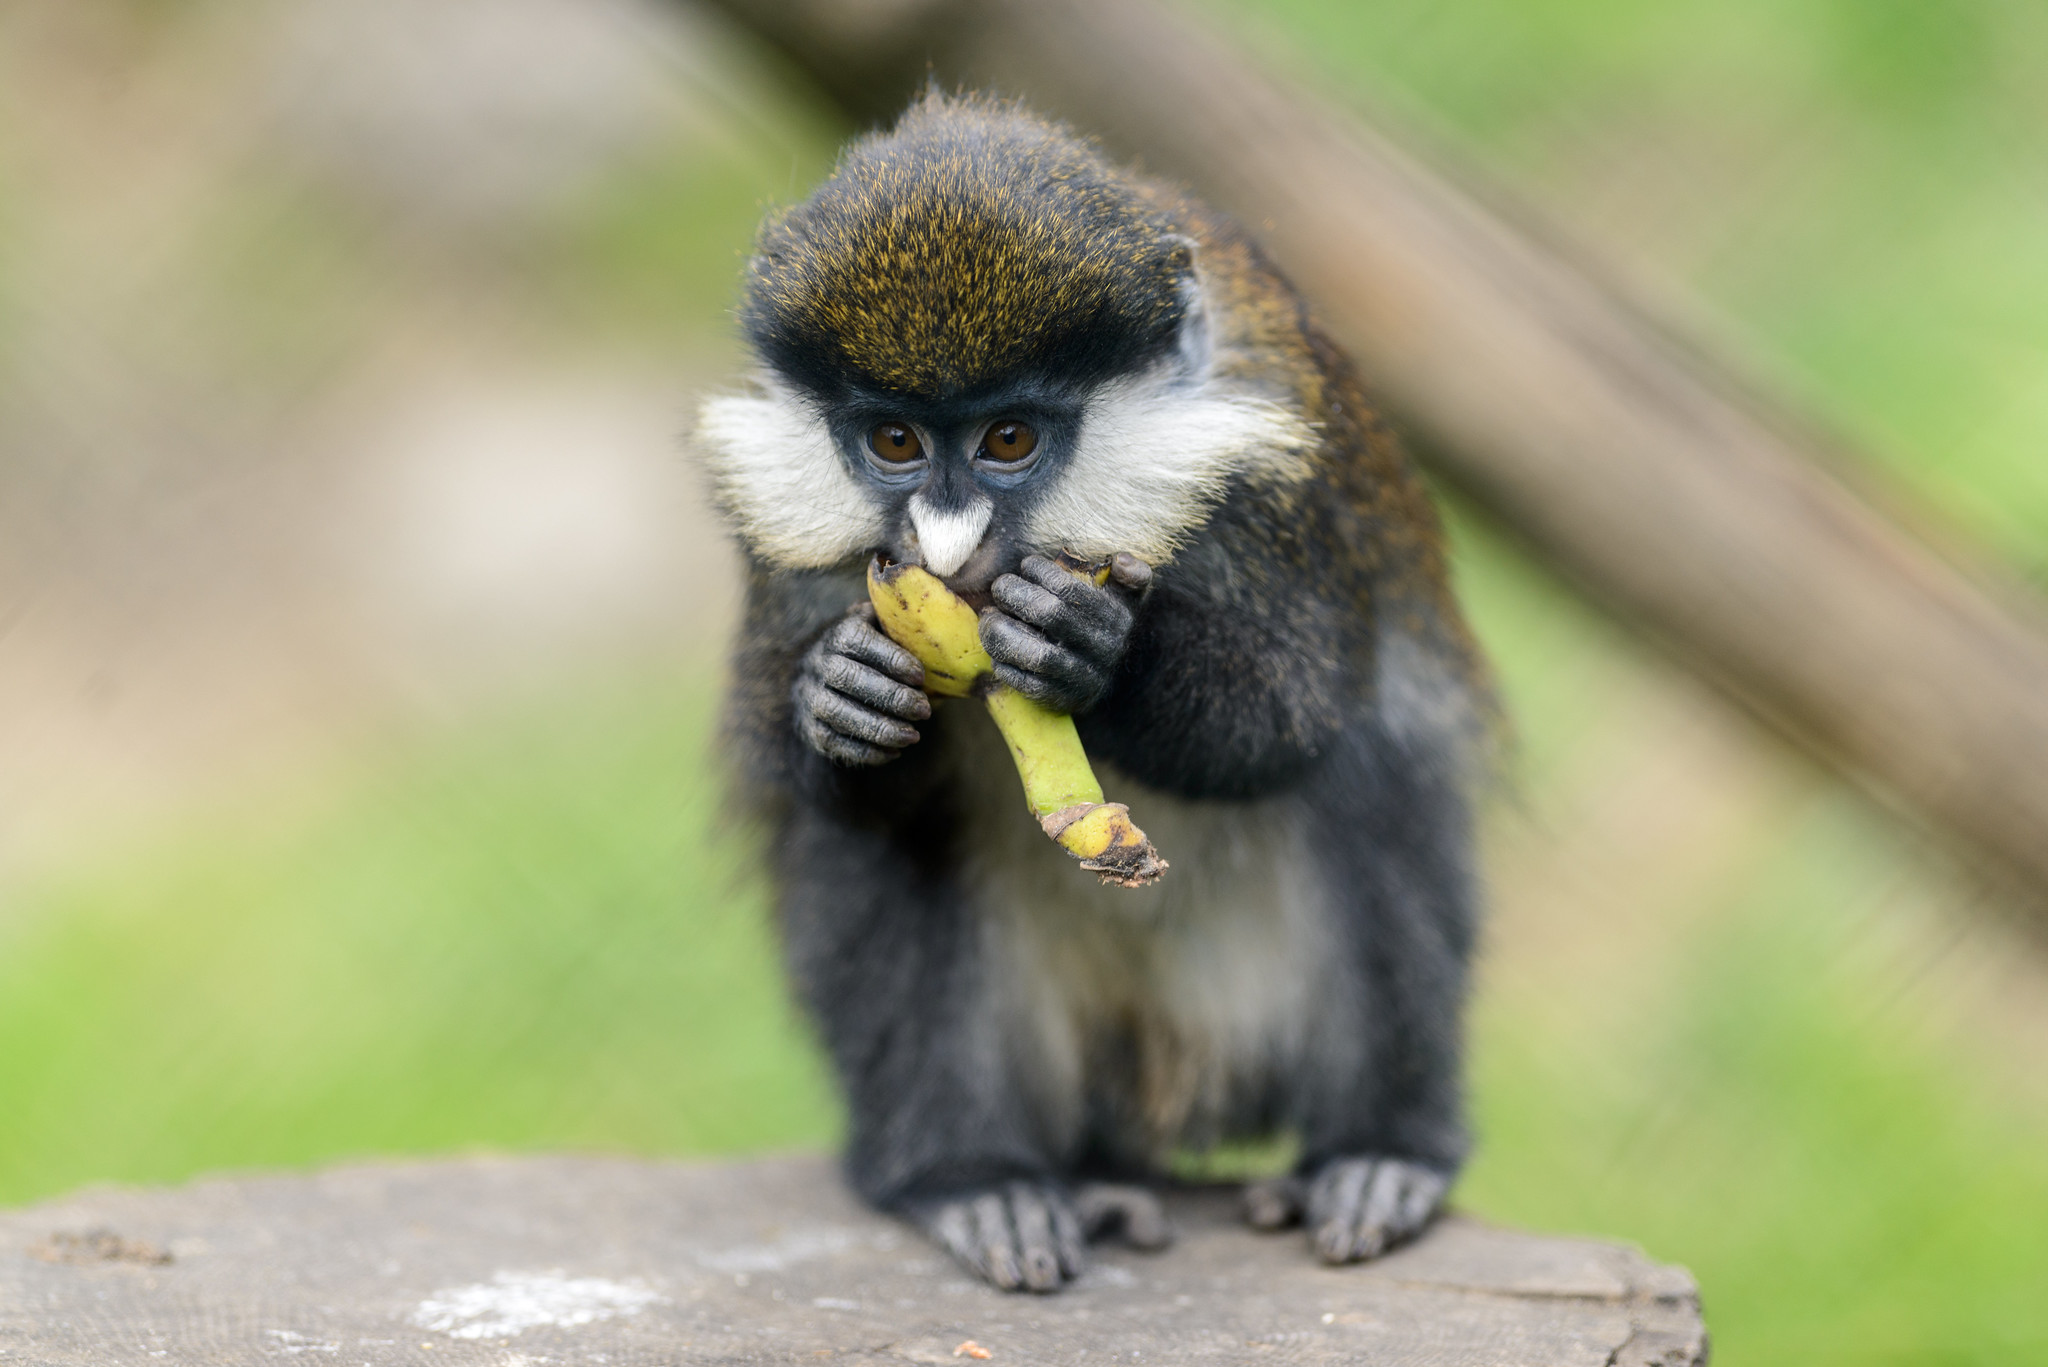 Guenon Eating a Banana